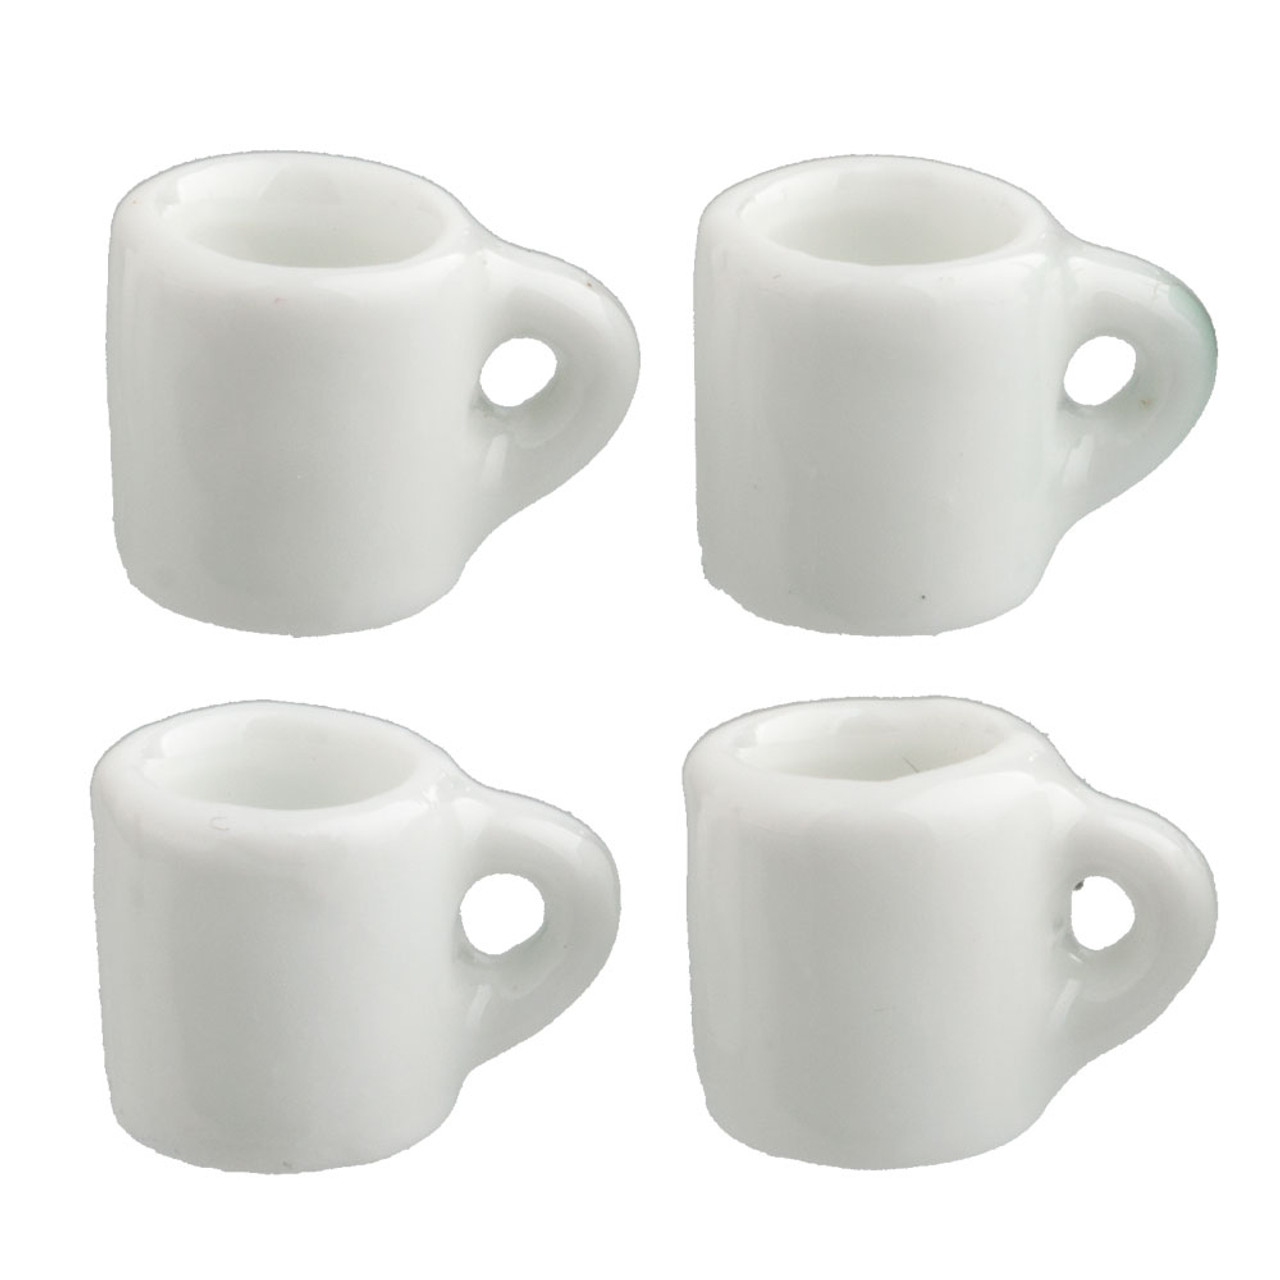 4 Large White Mugs